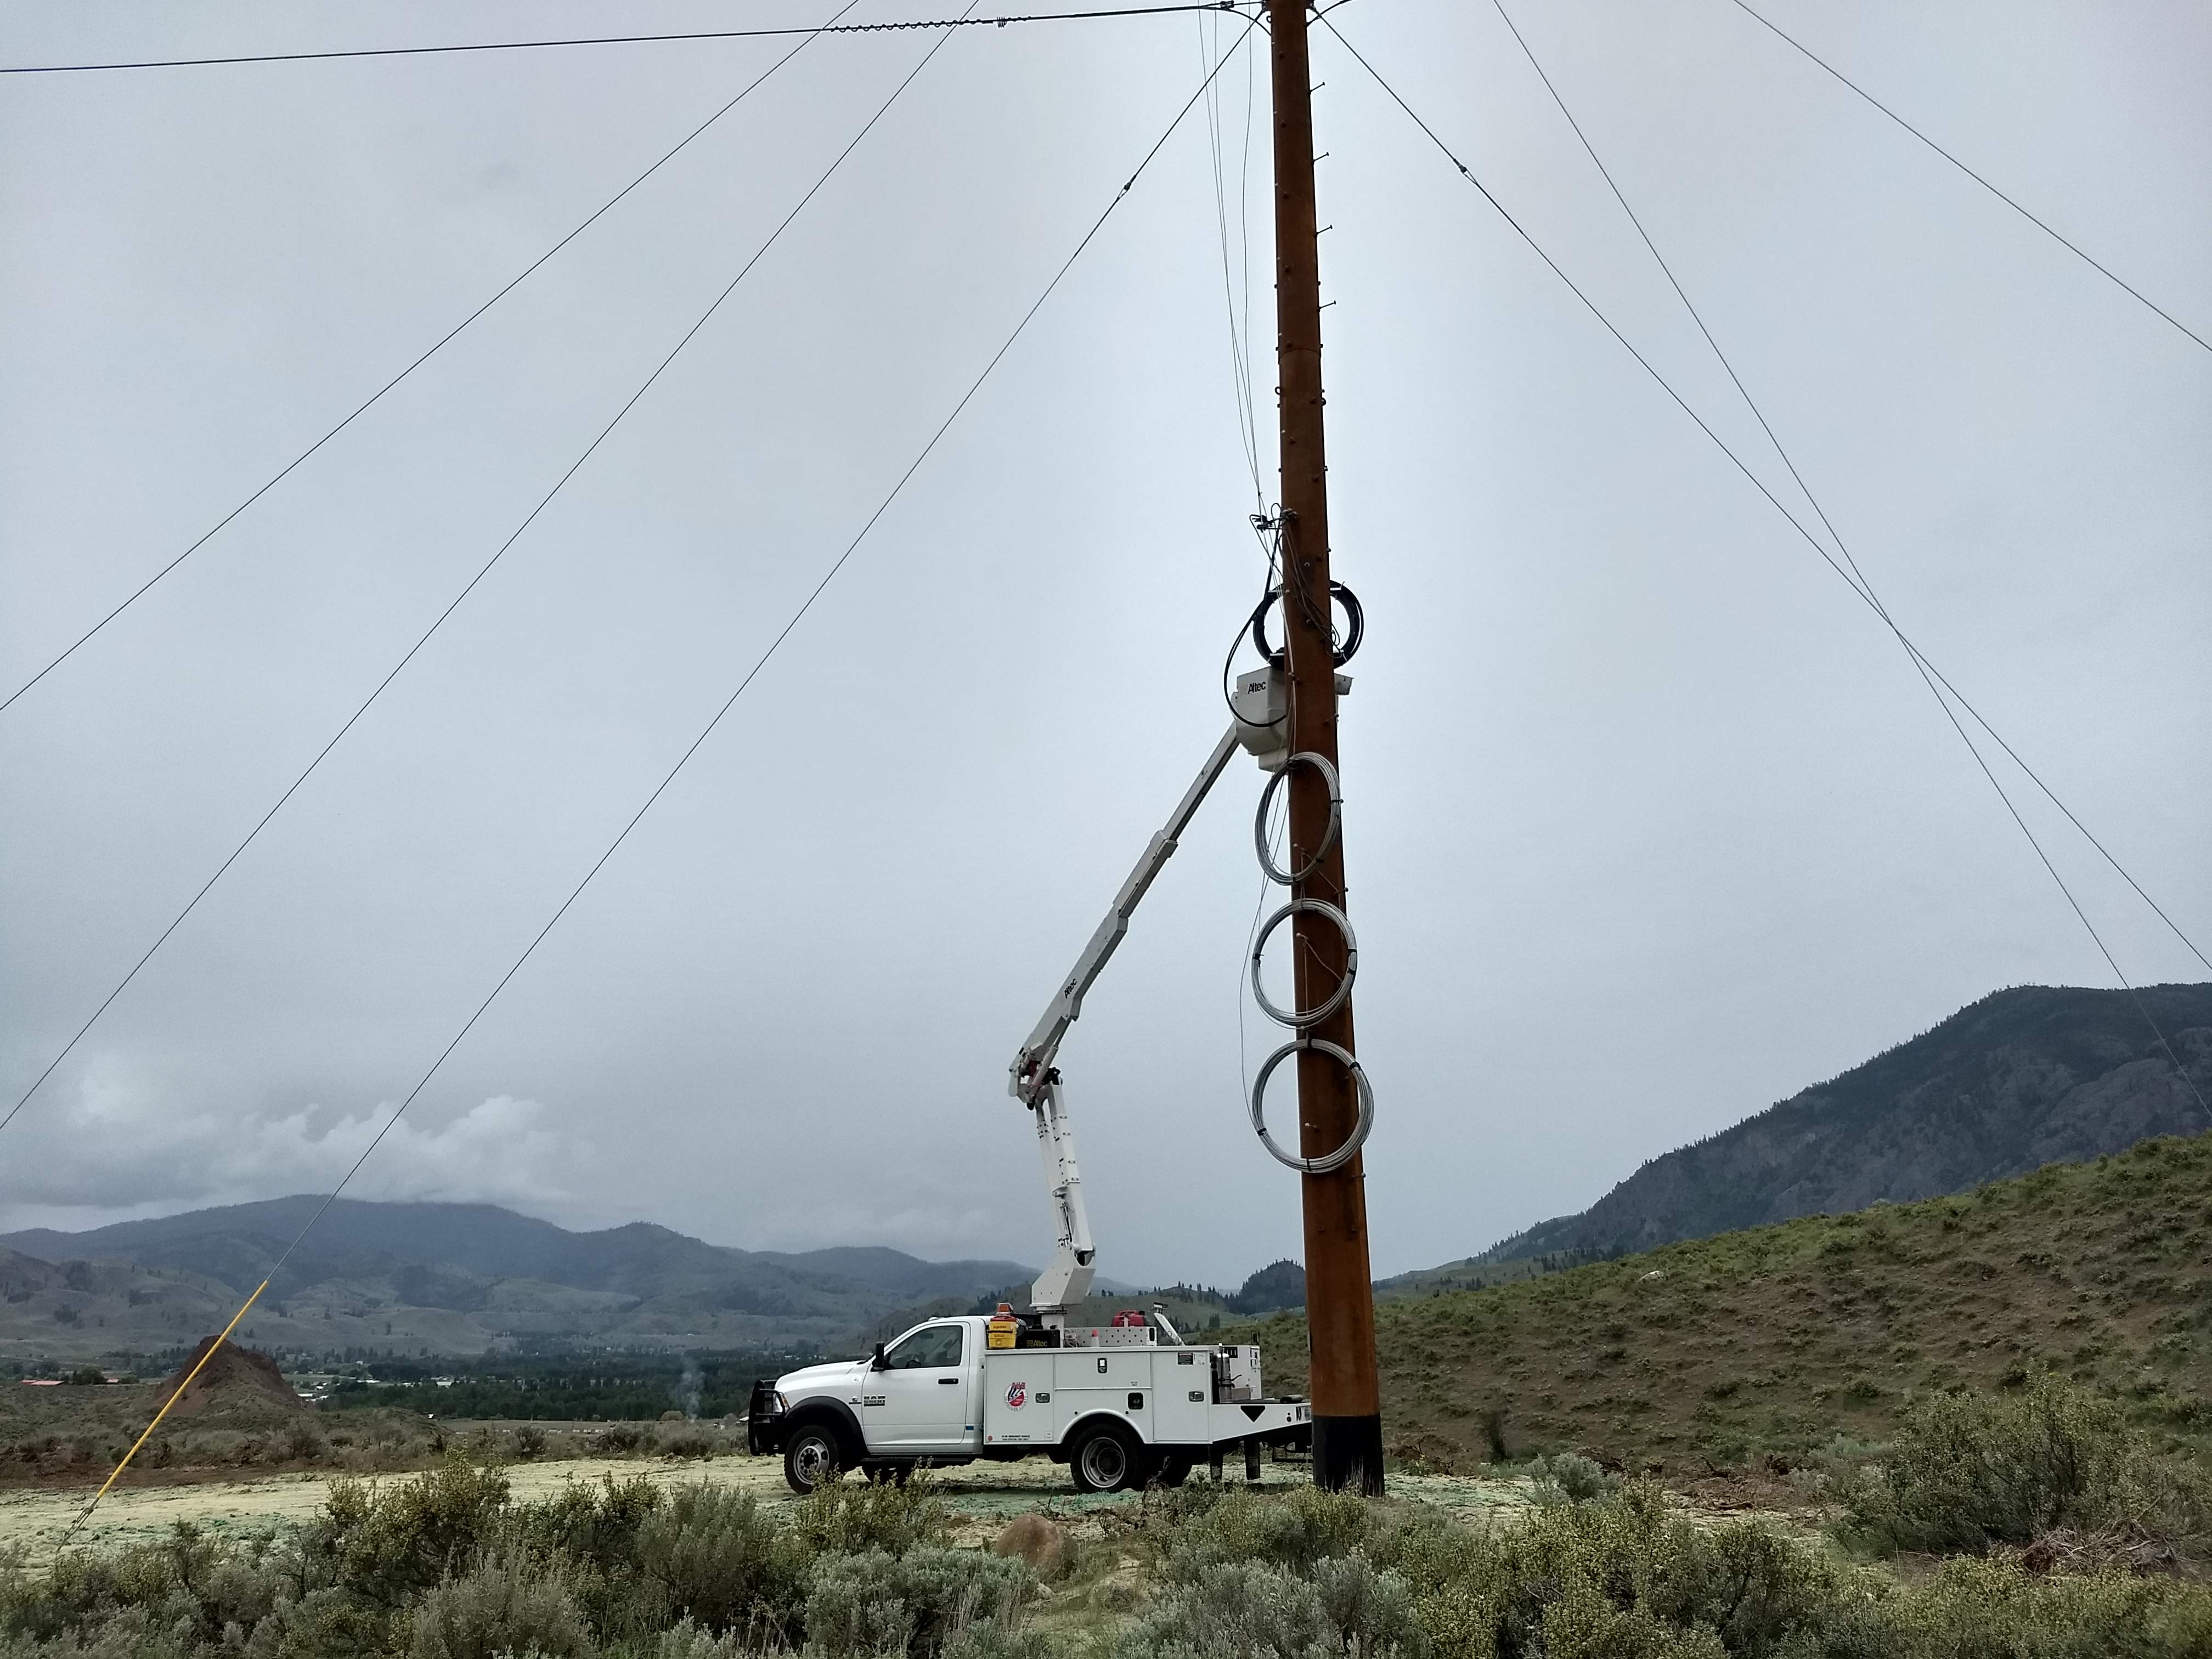 Hanging fiber optics on a power pole with bucket truck